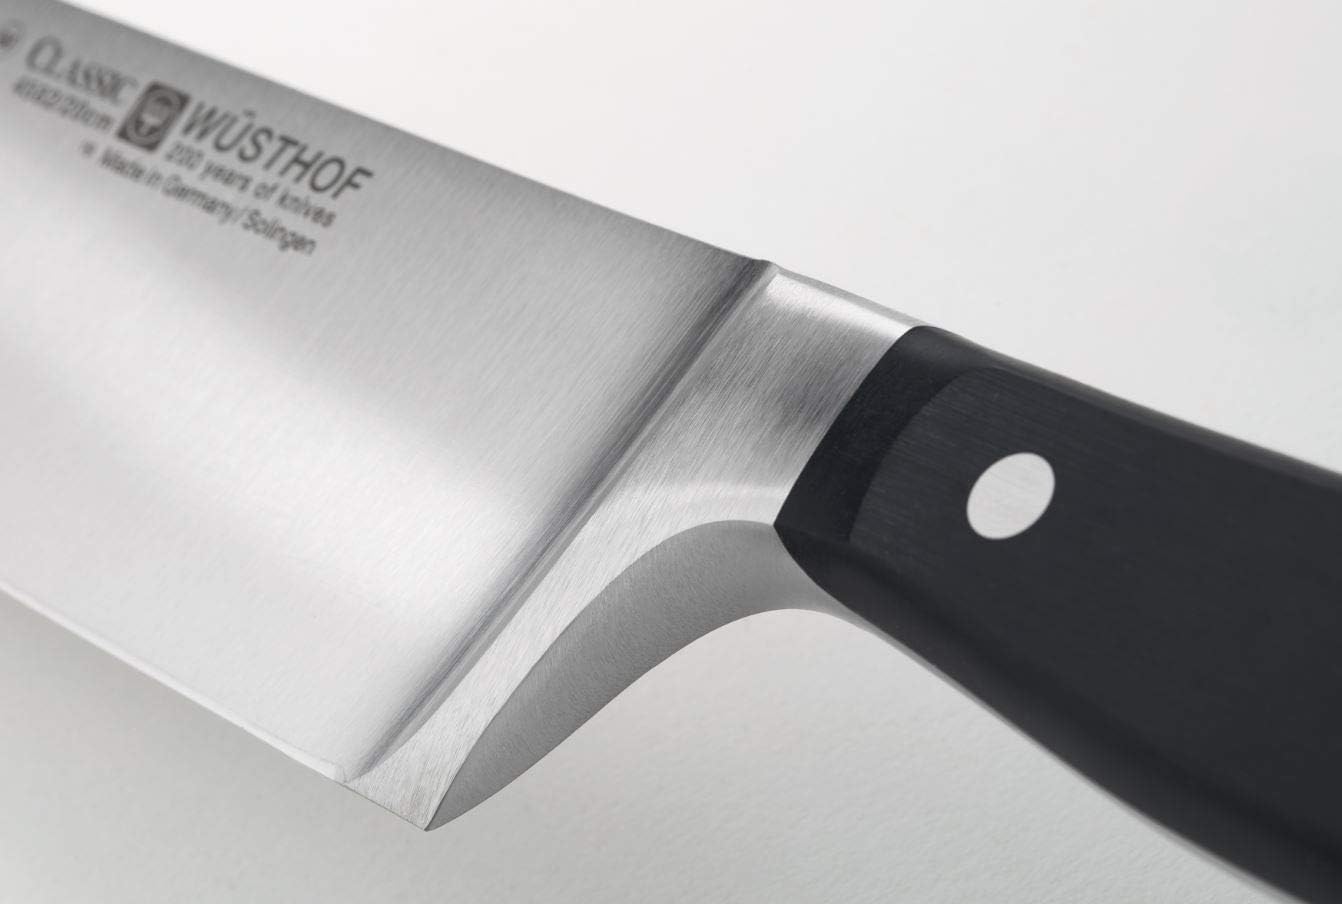 Wusthof Classic 4 1/2-Inch Utility Knife